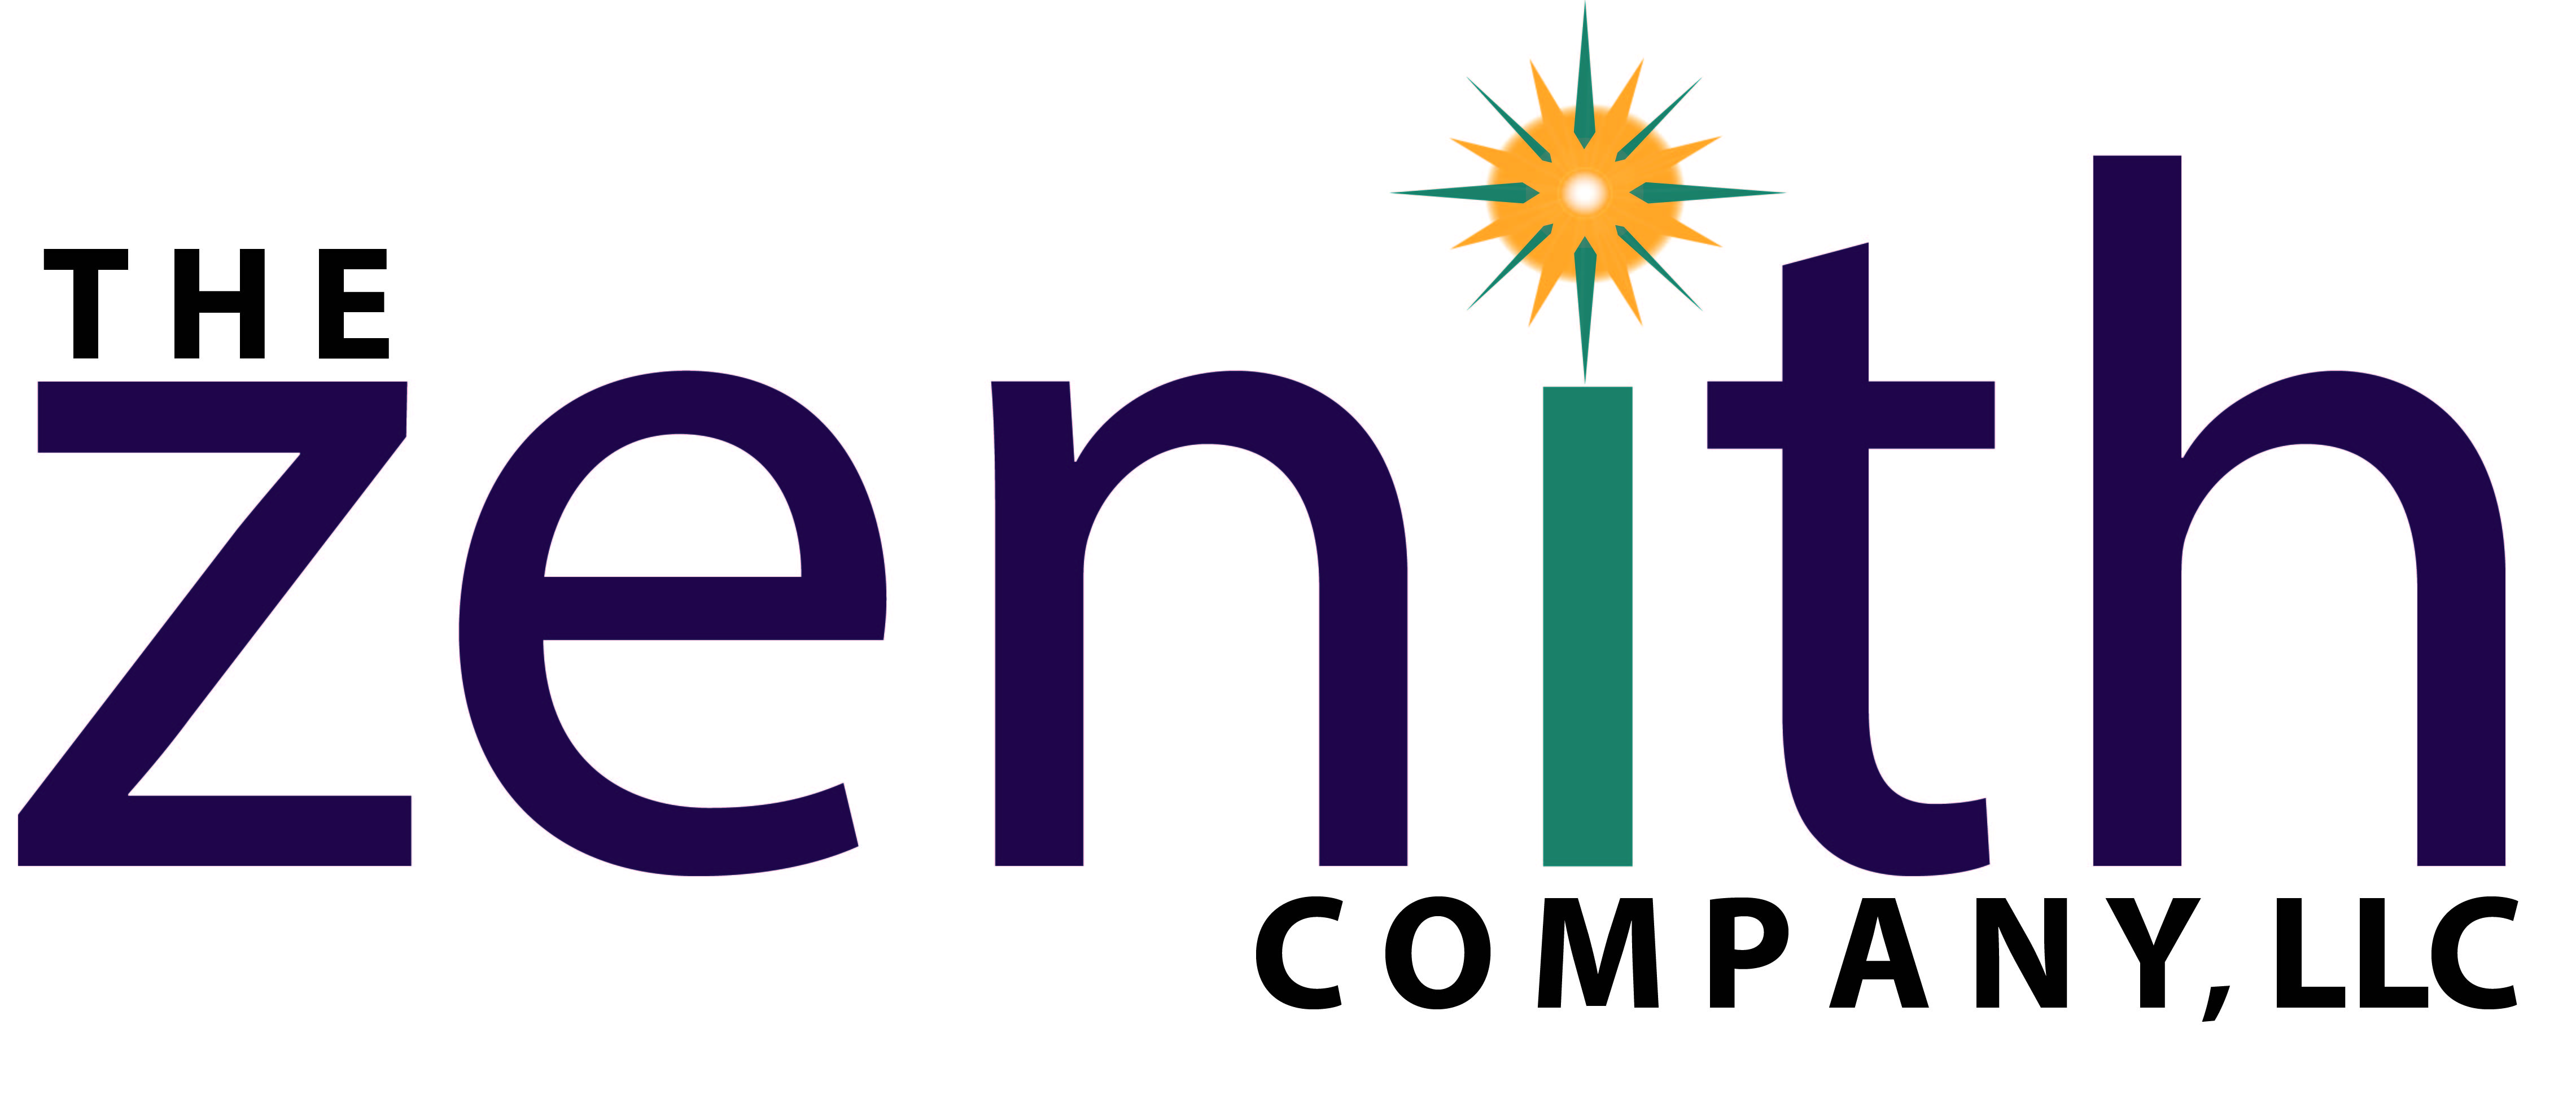 The Zenith Company